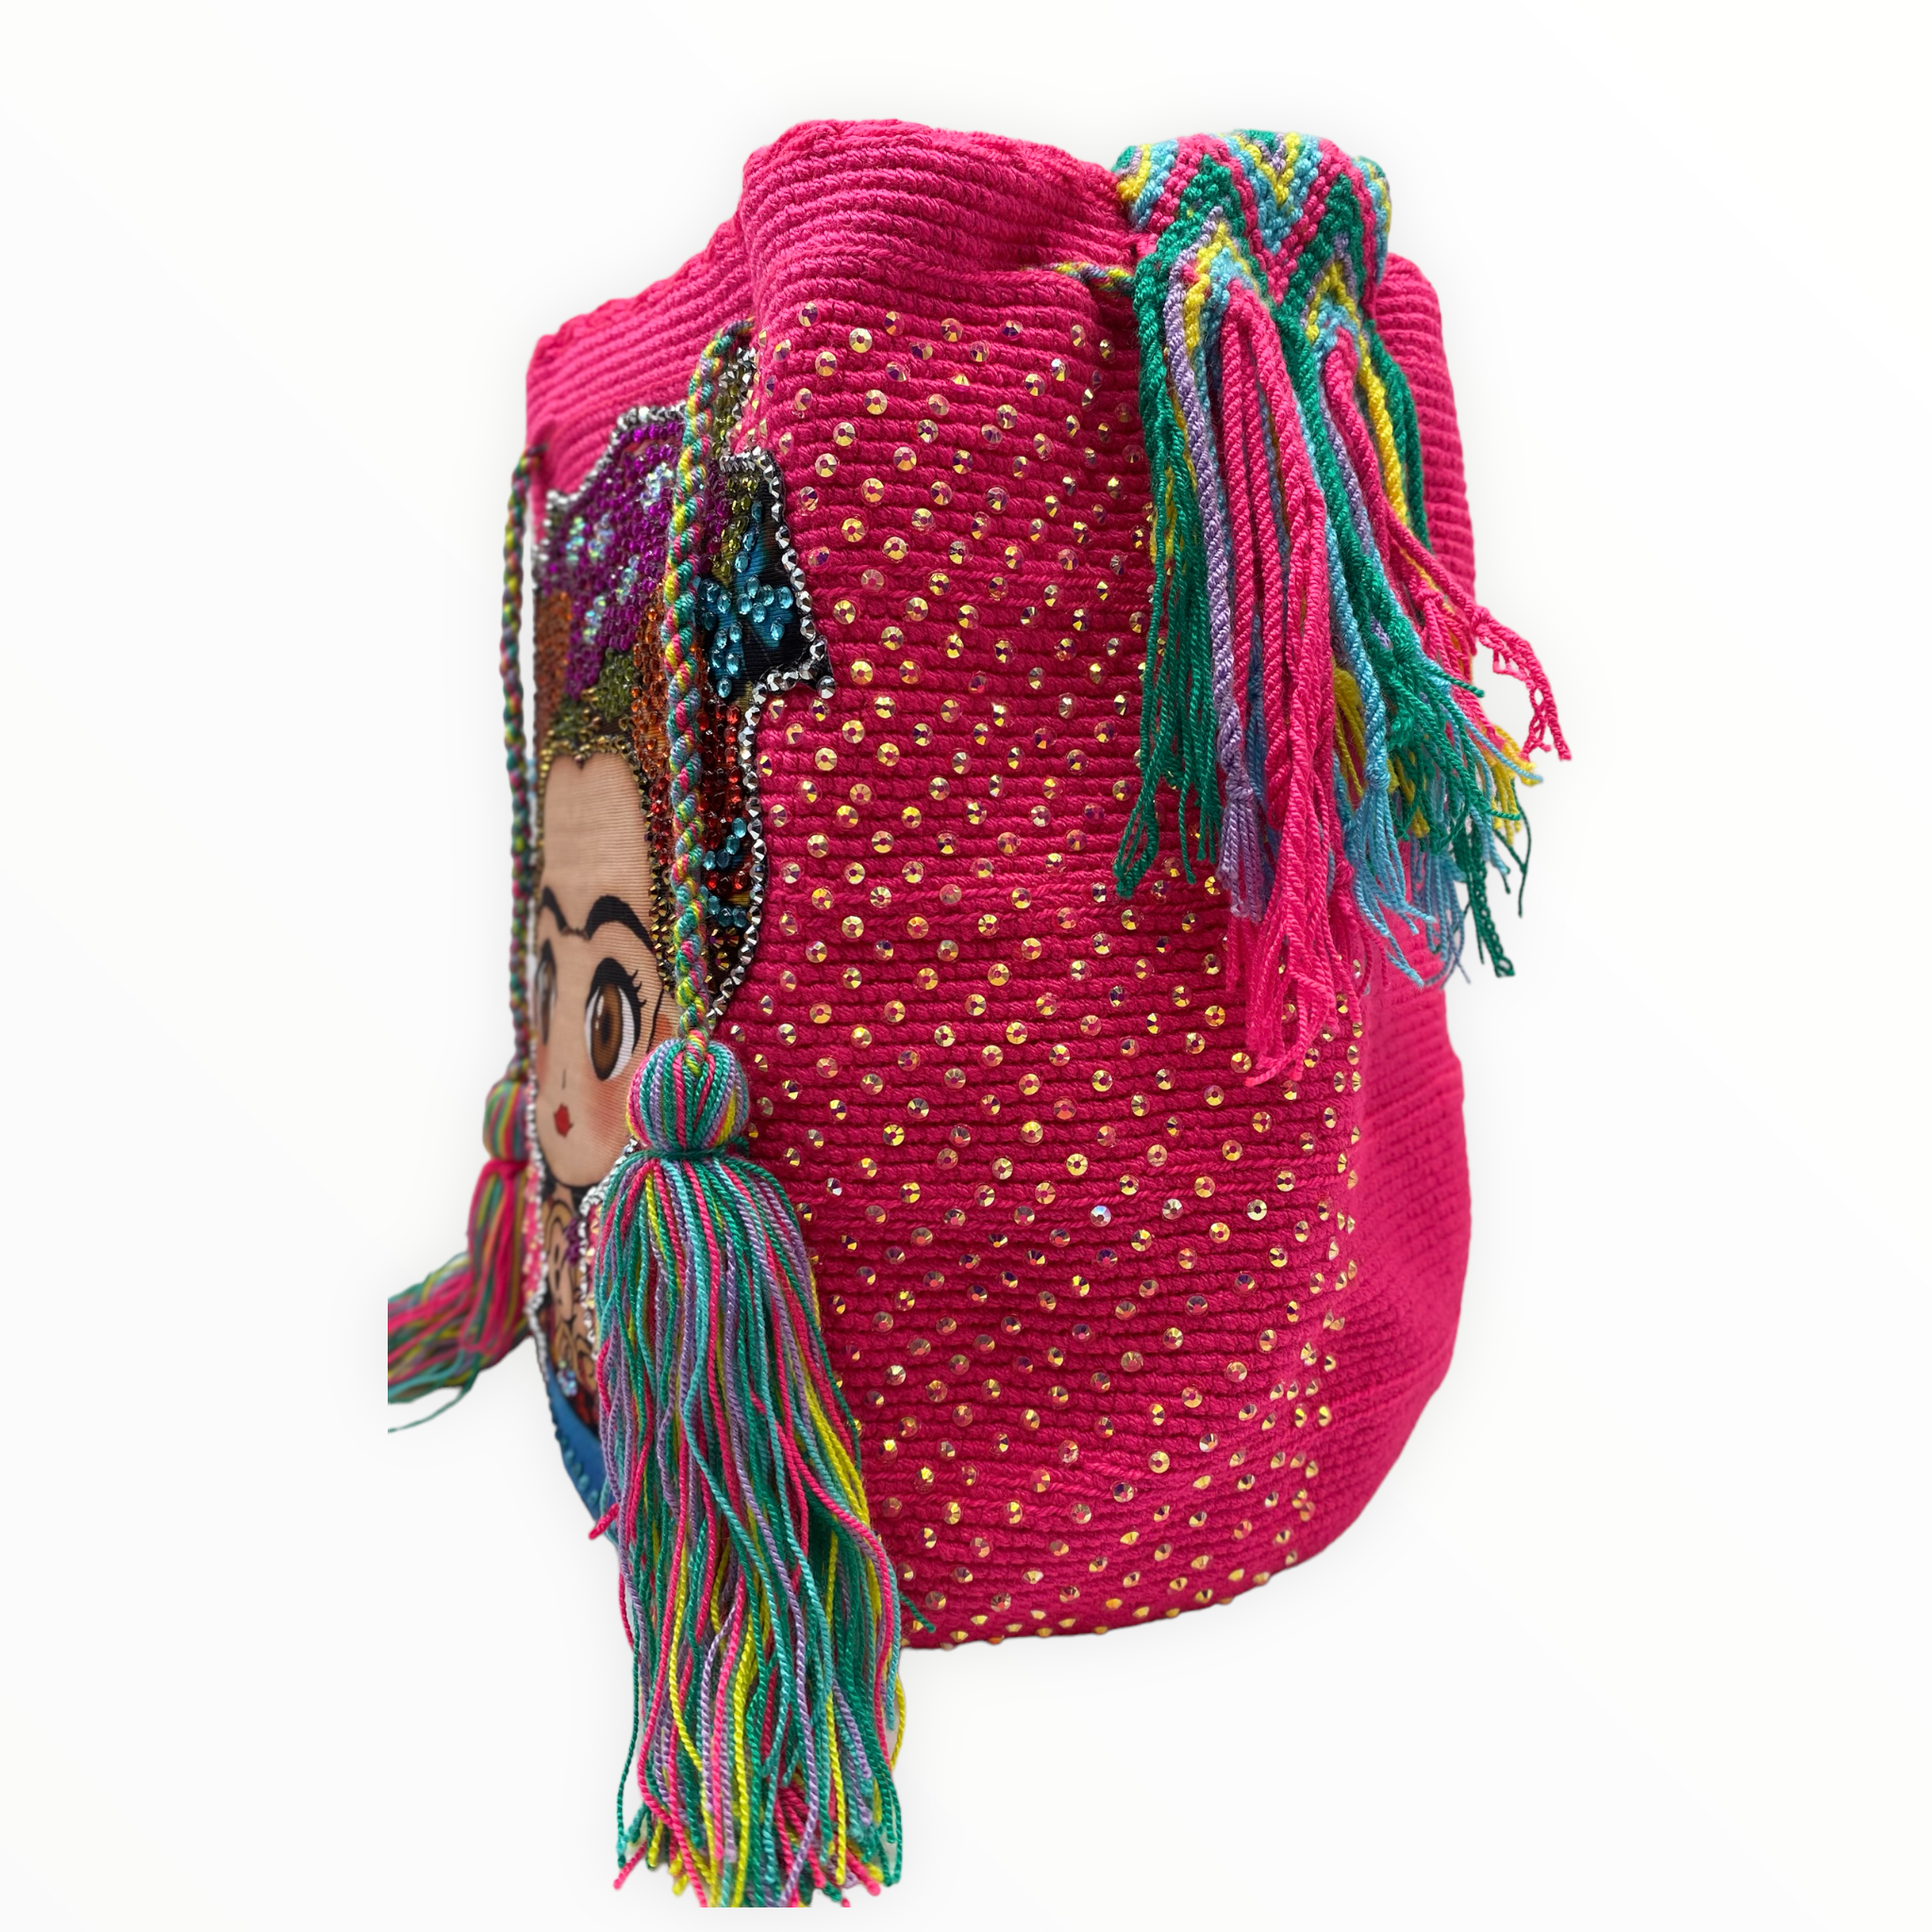 Naraya cross body bag in striking pink